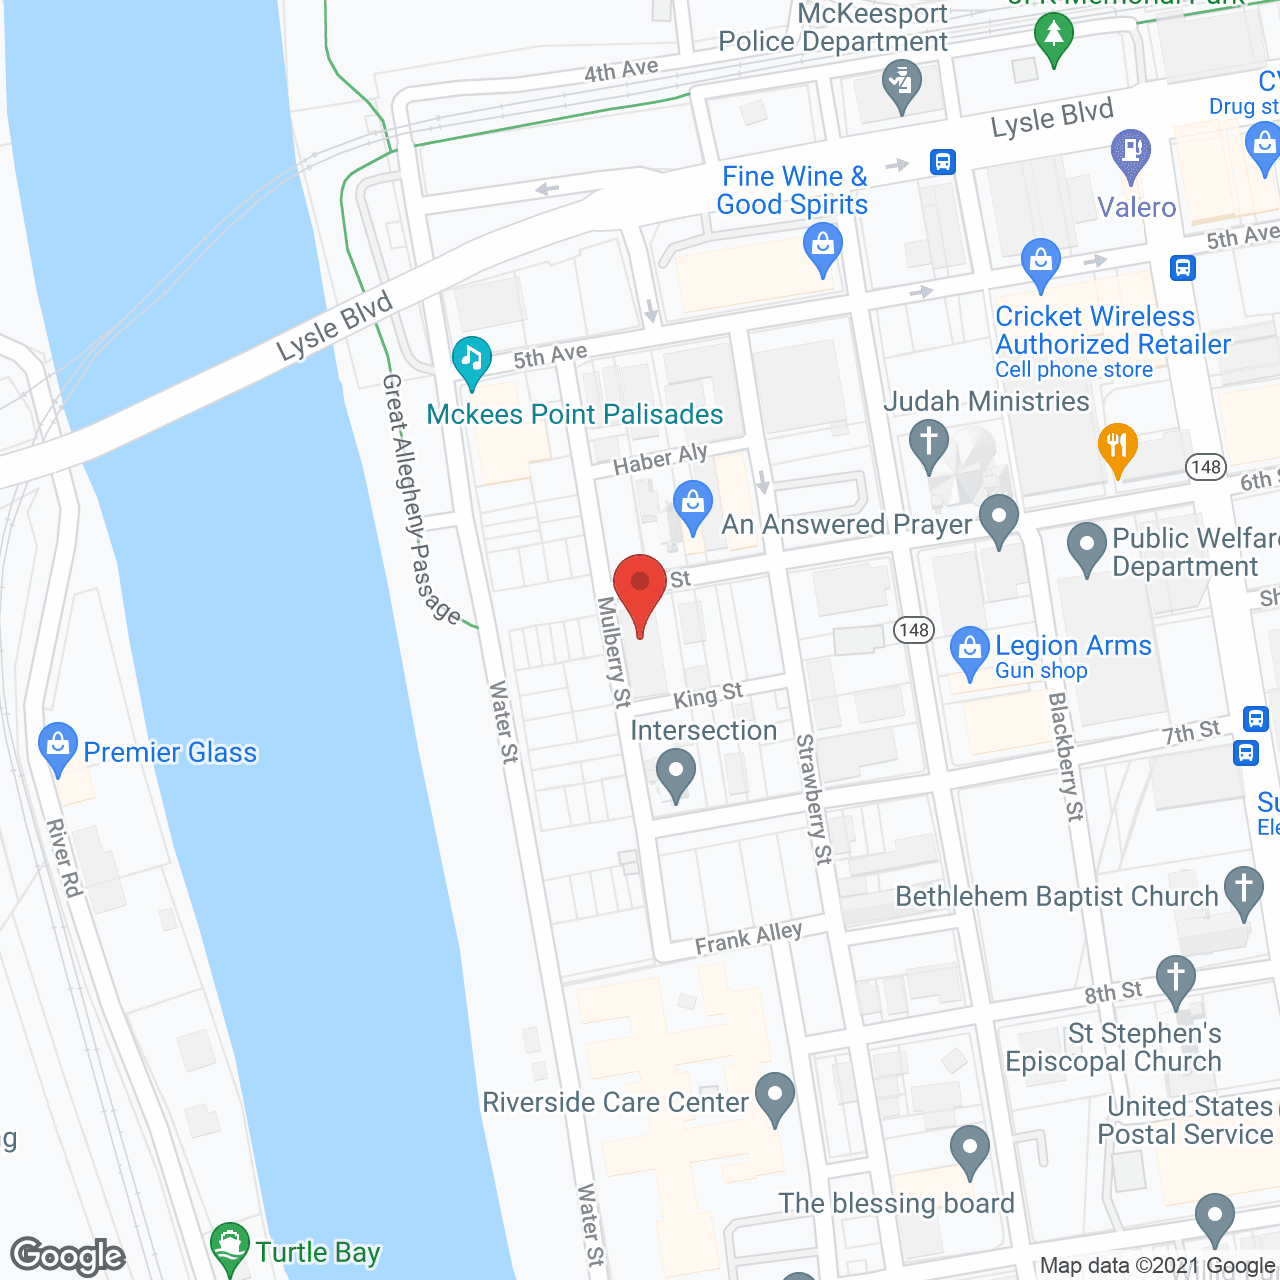 Mckeesport Place in google map